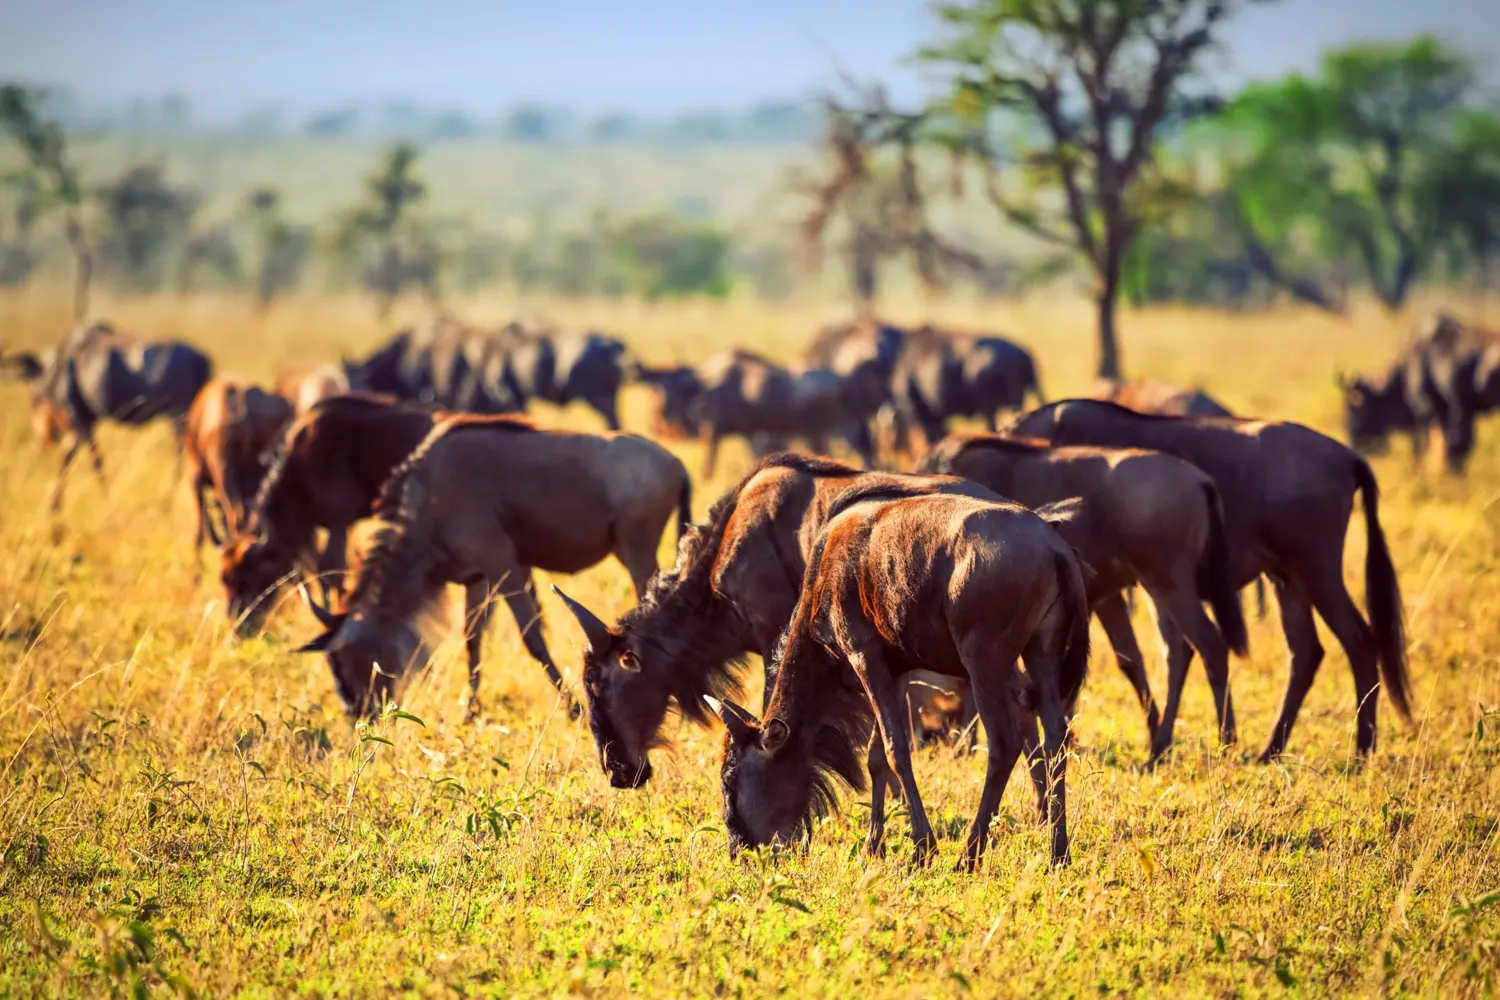 The Great Wildebeest Serengeti Migration